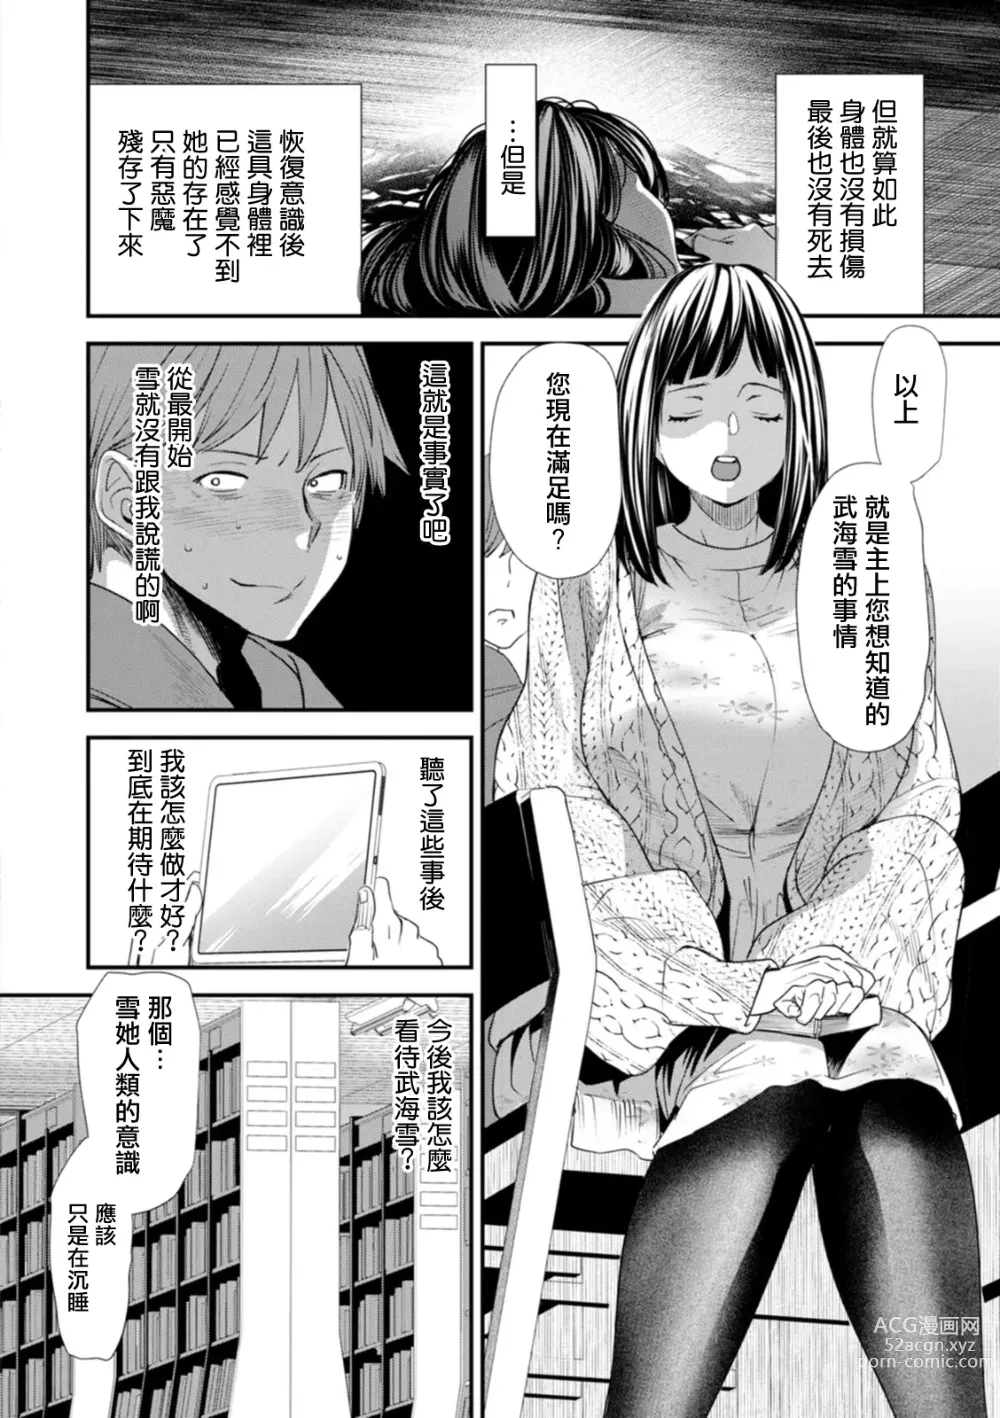 Page 6 of manga 淫魔女子大生の憂鬱 第6話 真實与覺醒